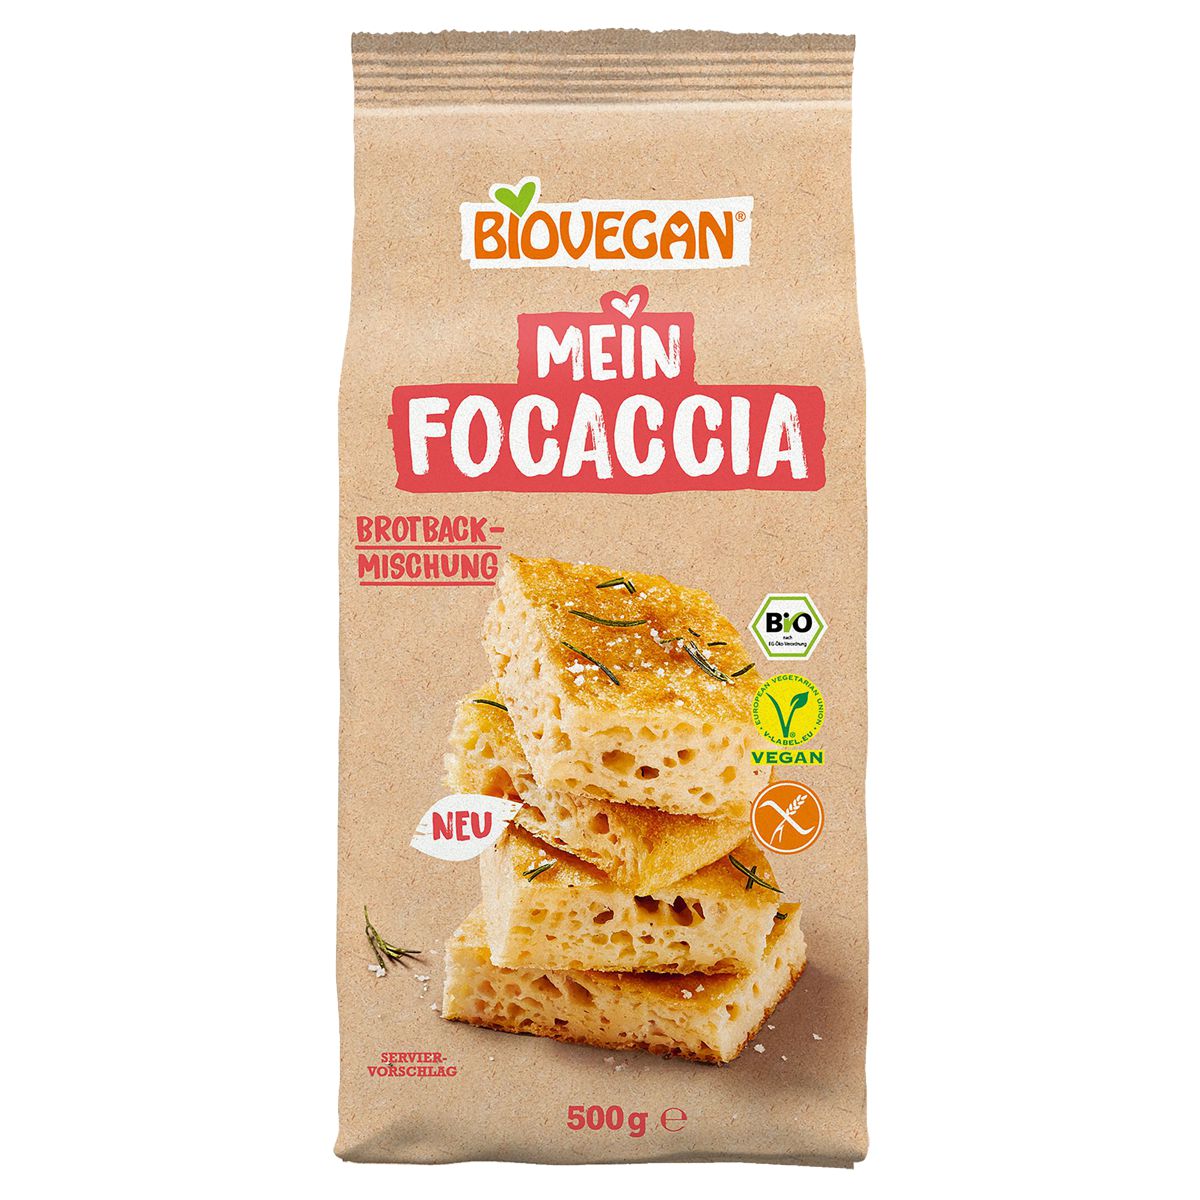 Biovegan Mein Focaccia Brotbackmischung vegan 500 g